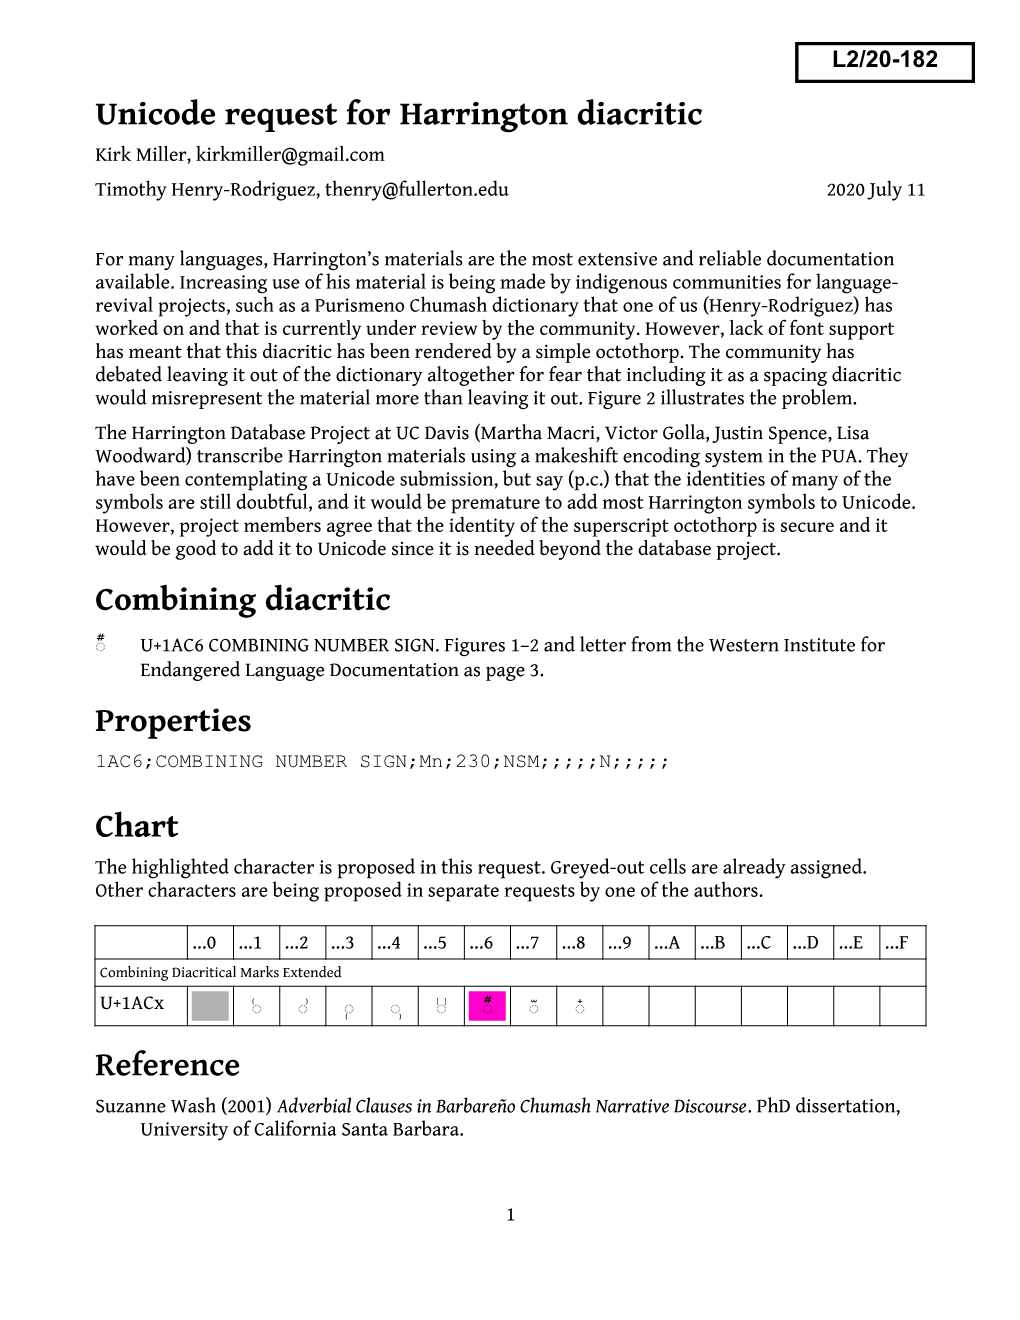 Unicode Request for Harrington Diacritic Combining Diacritic Properties Chart Reference